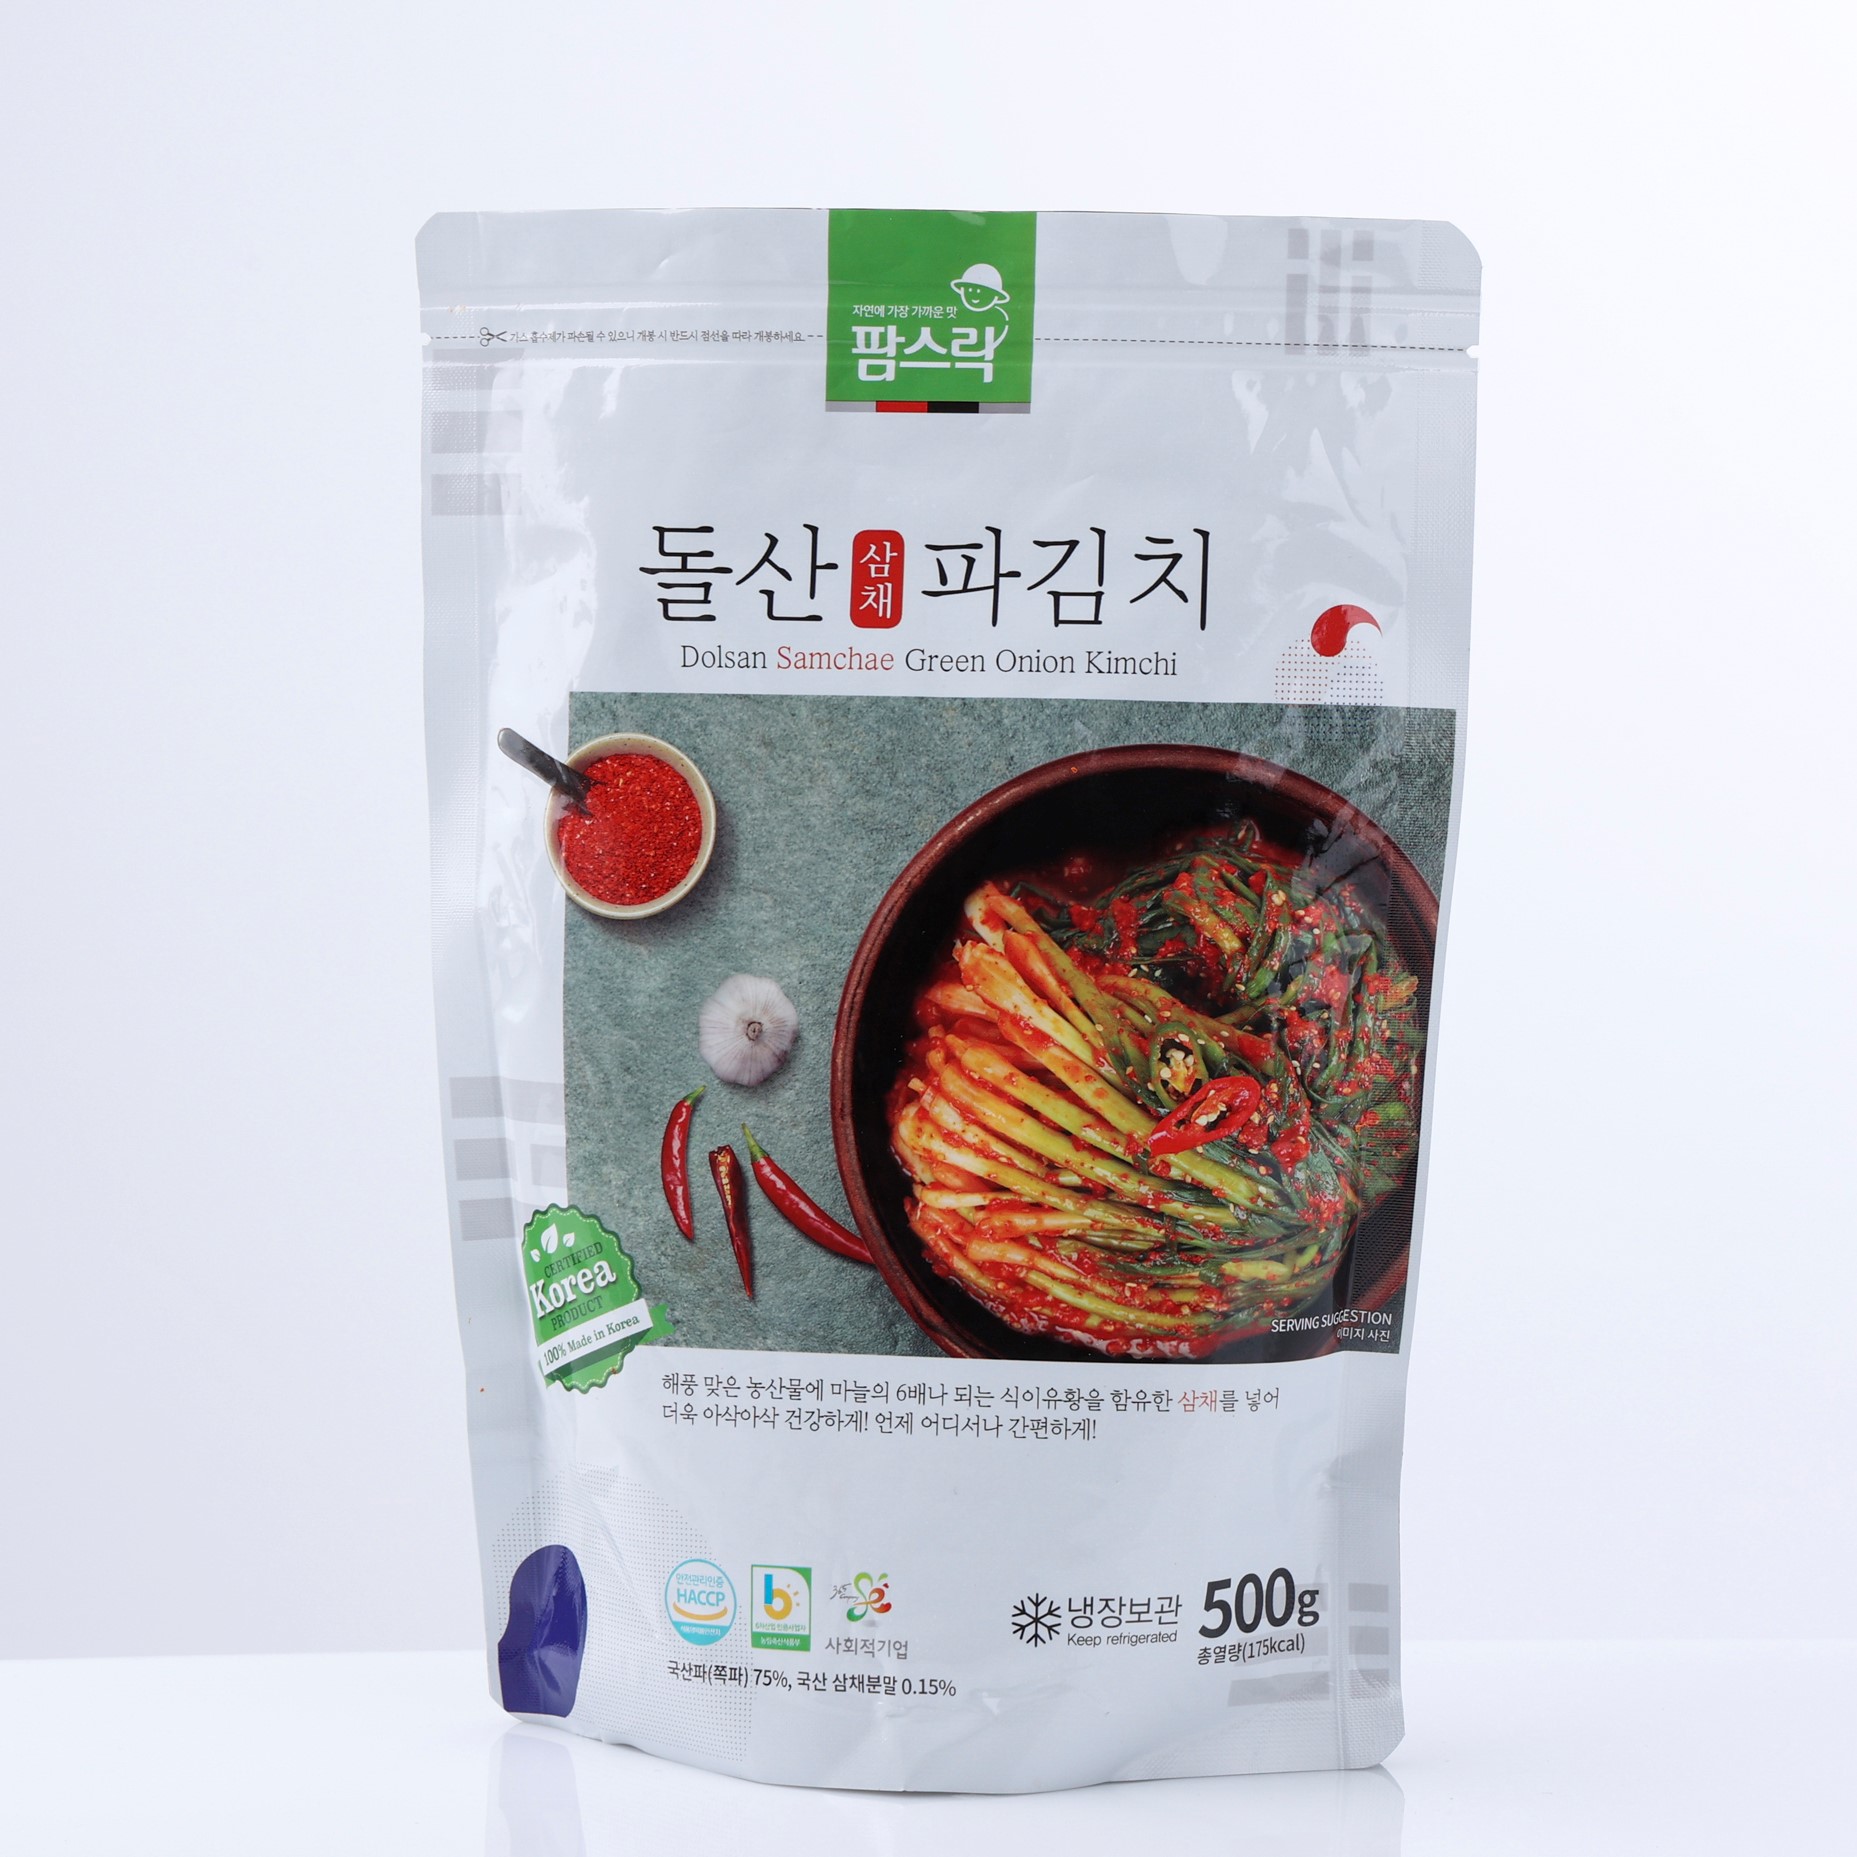 Dolsan Samchae Green Onion Kimchi